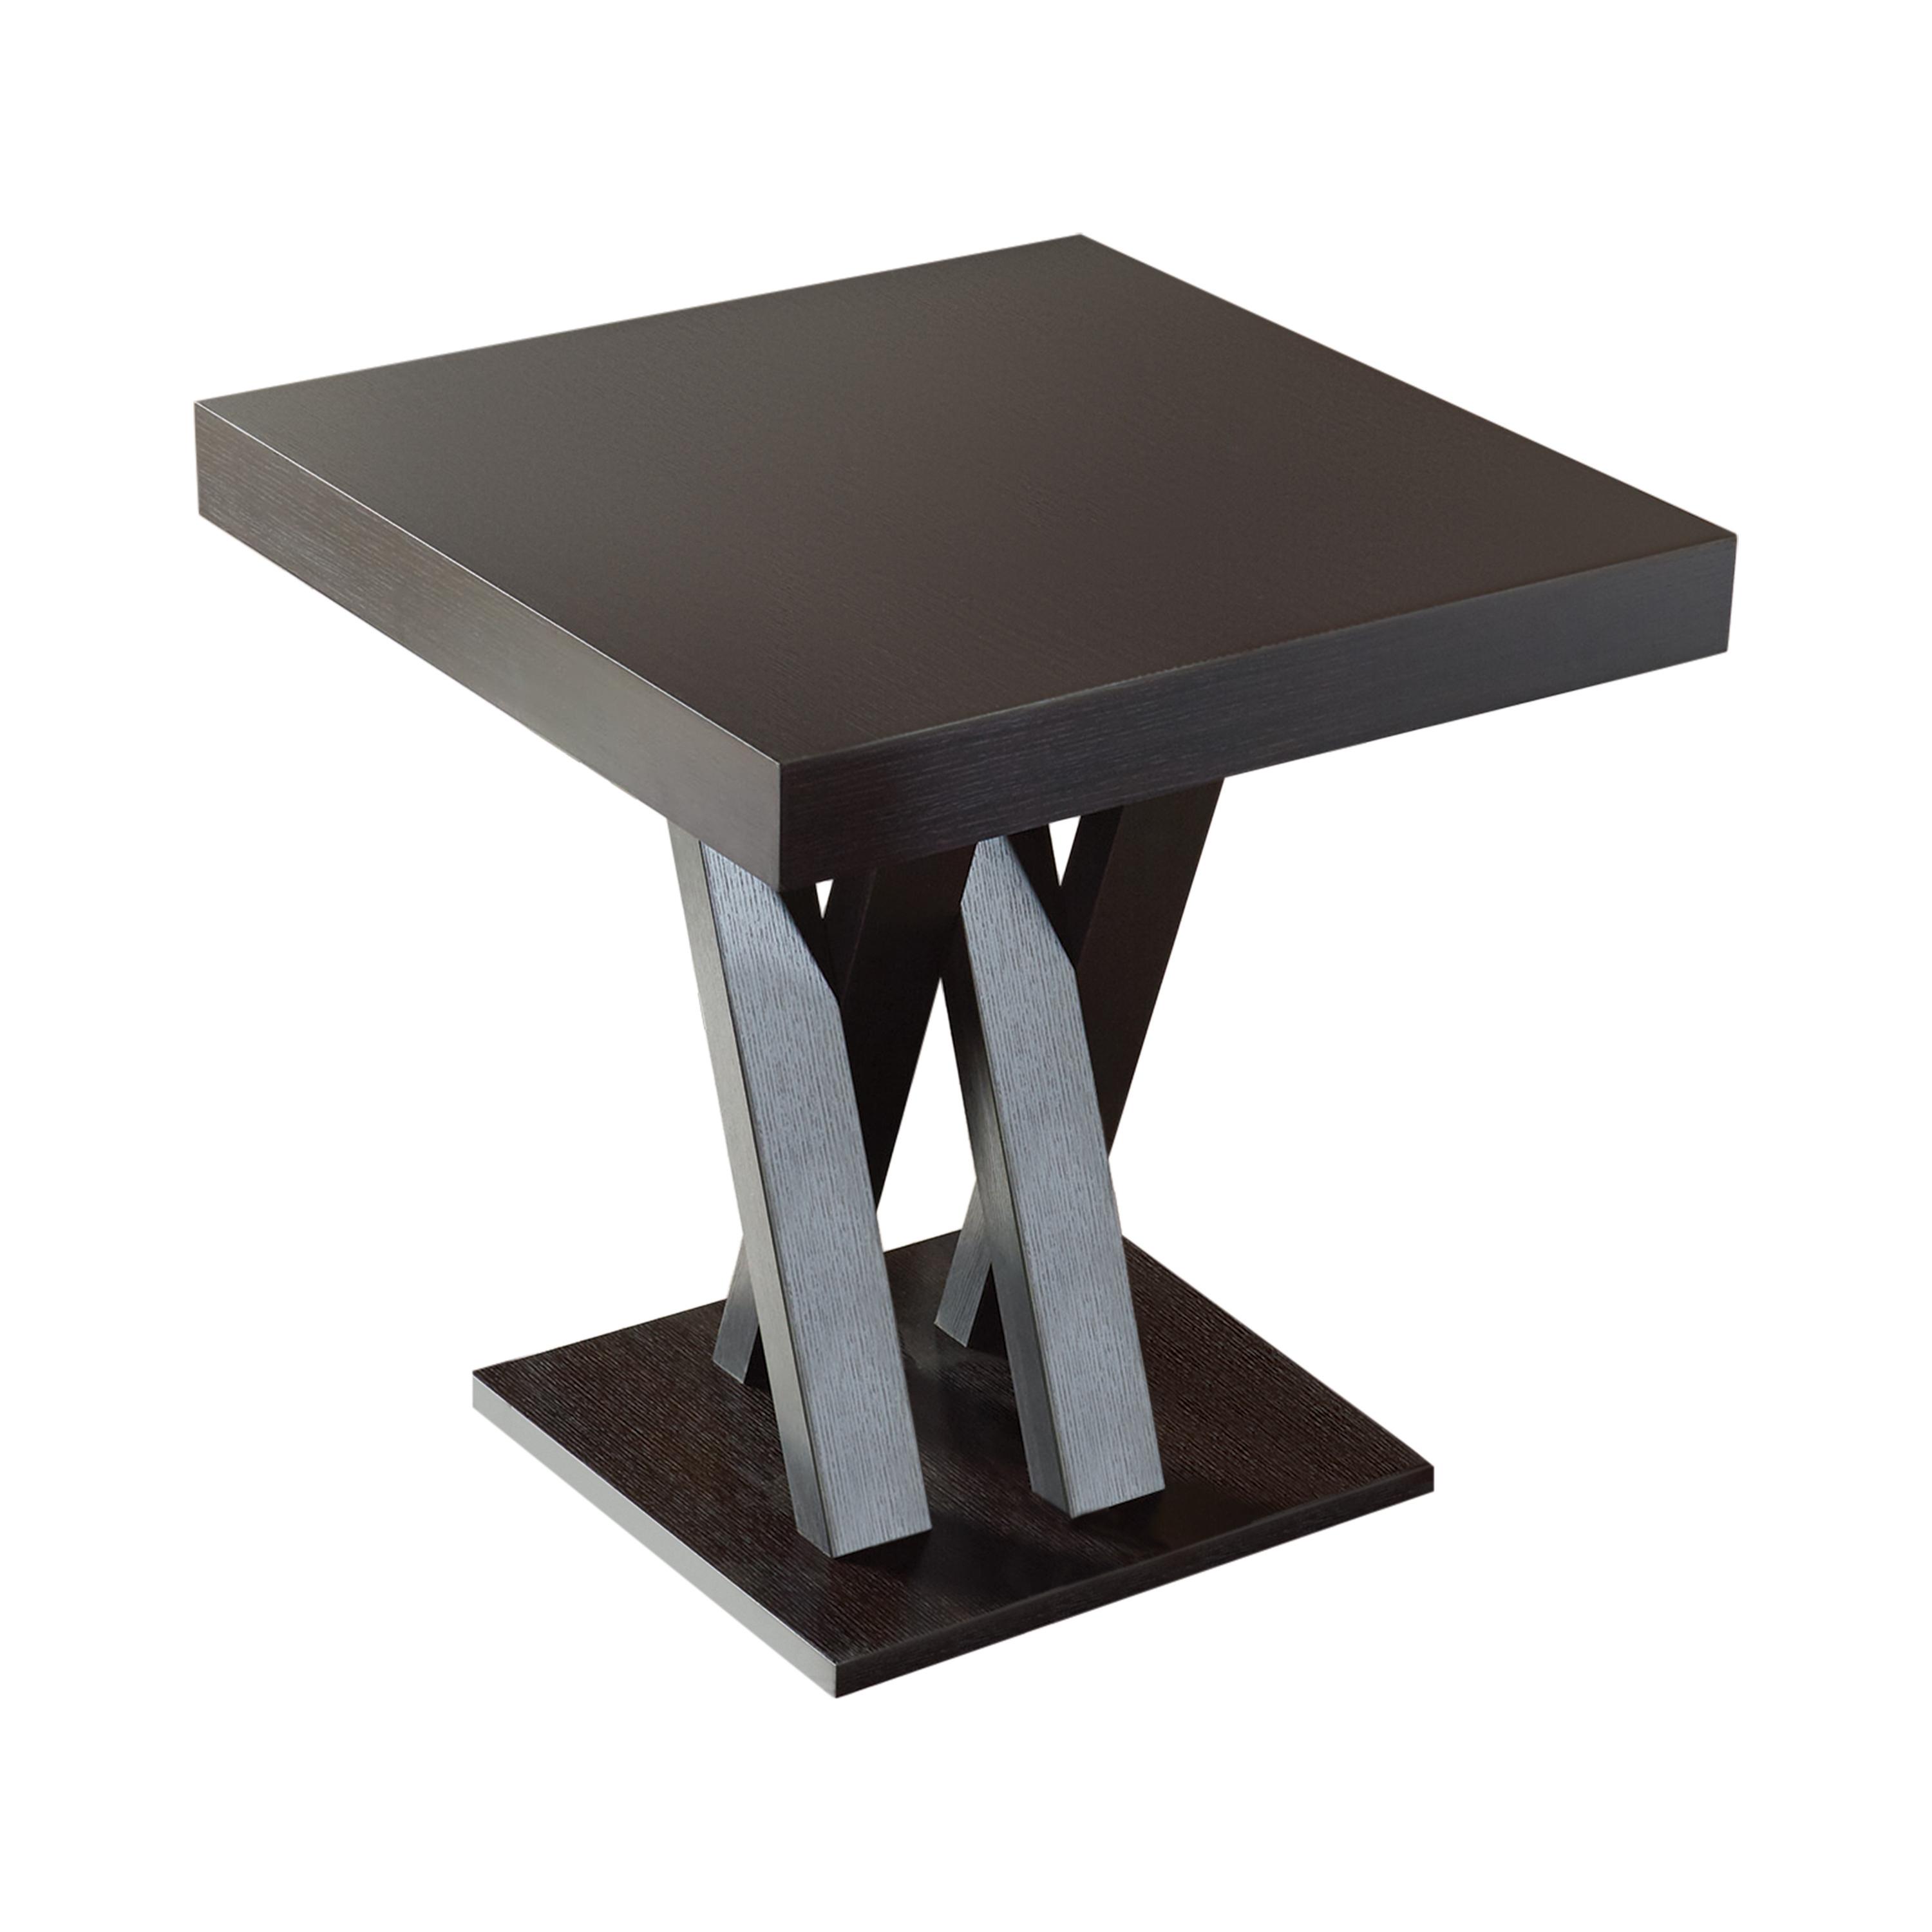 Contemporary Counter Height Table 100523 Lampton 100523 in Cappuccino 